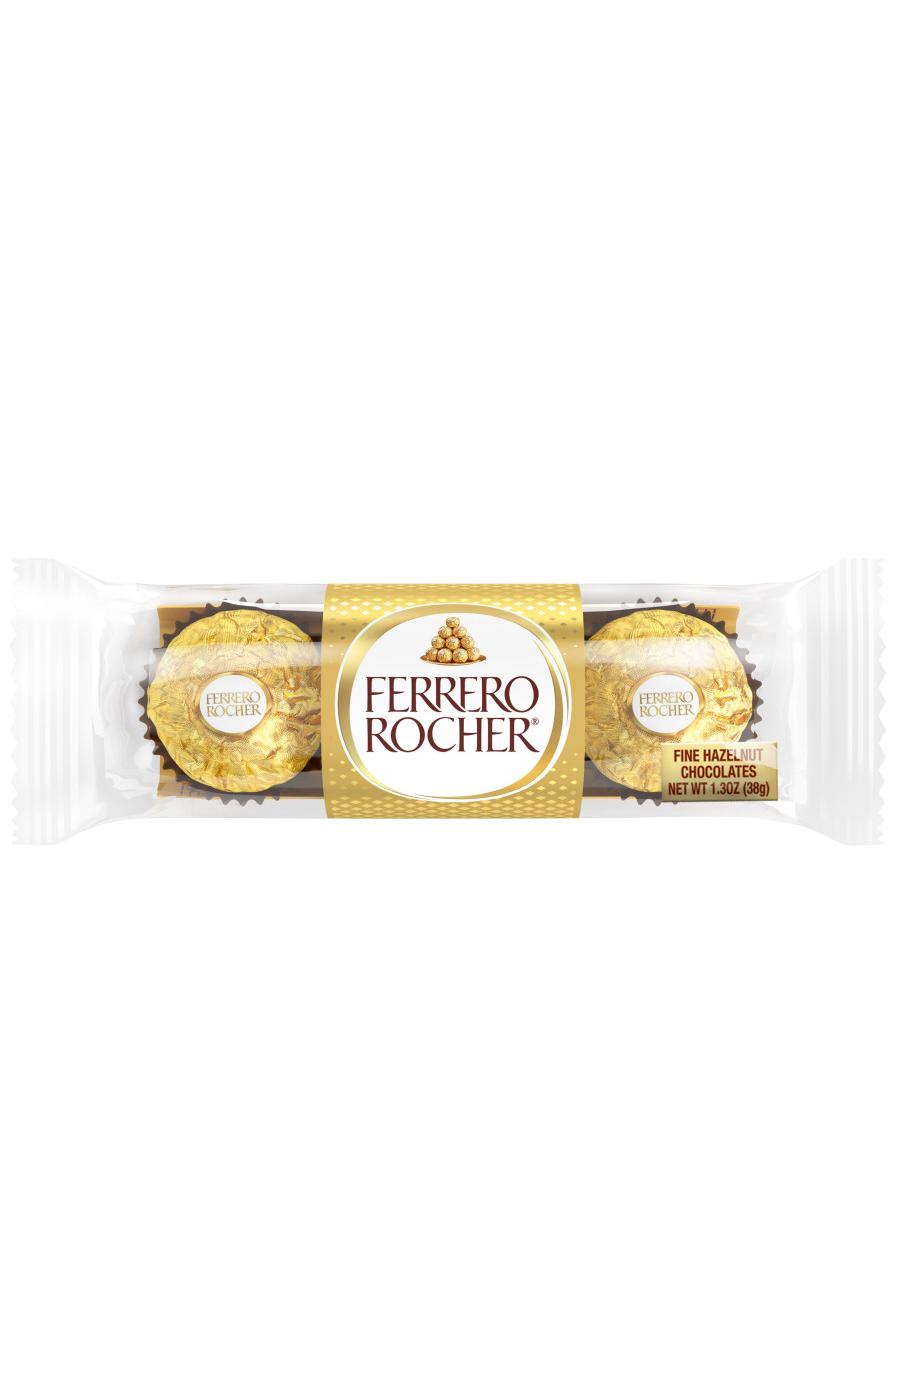 Ferrero, Rocher